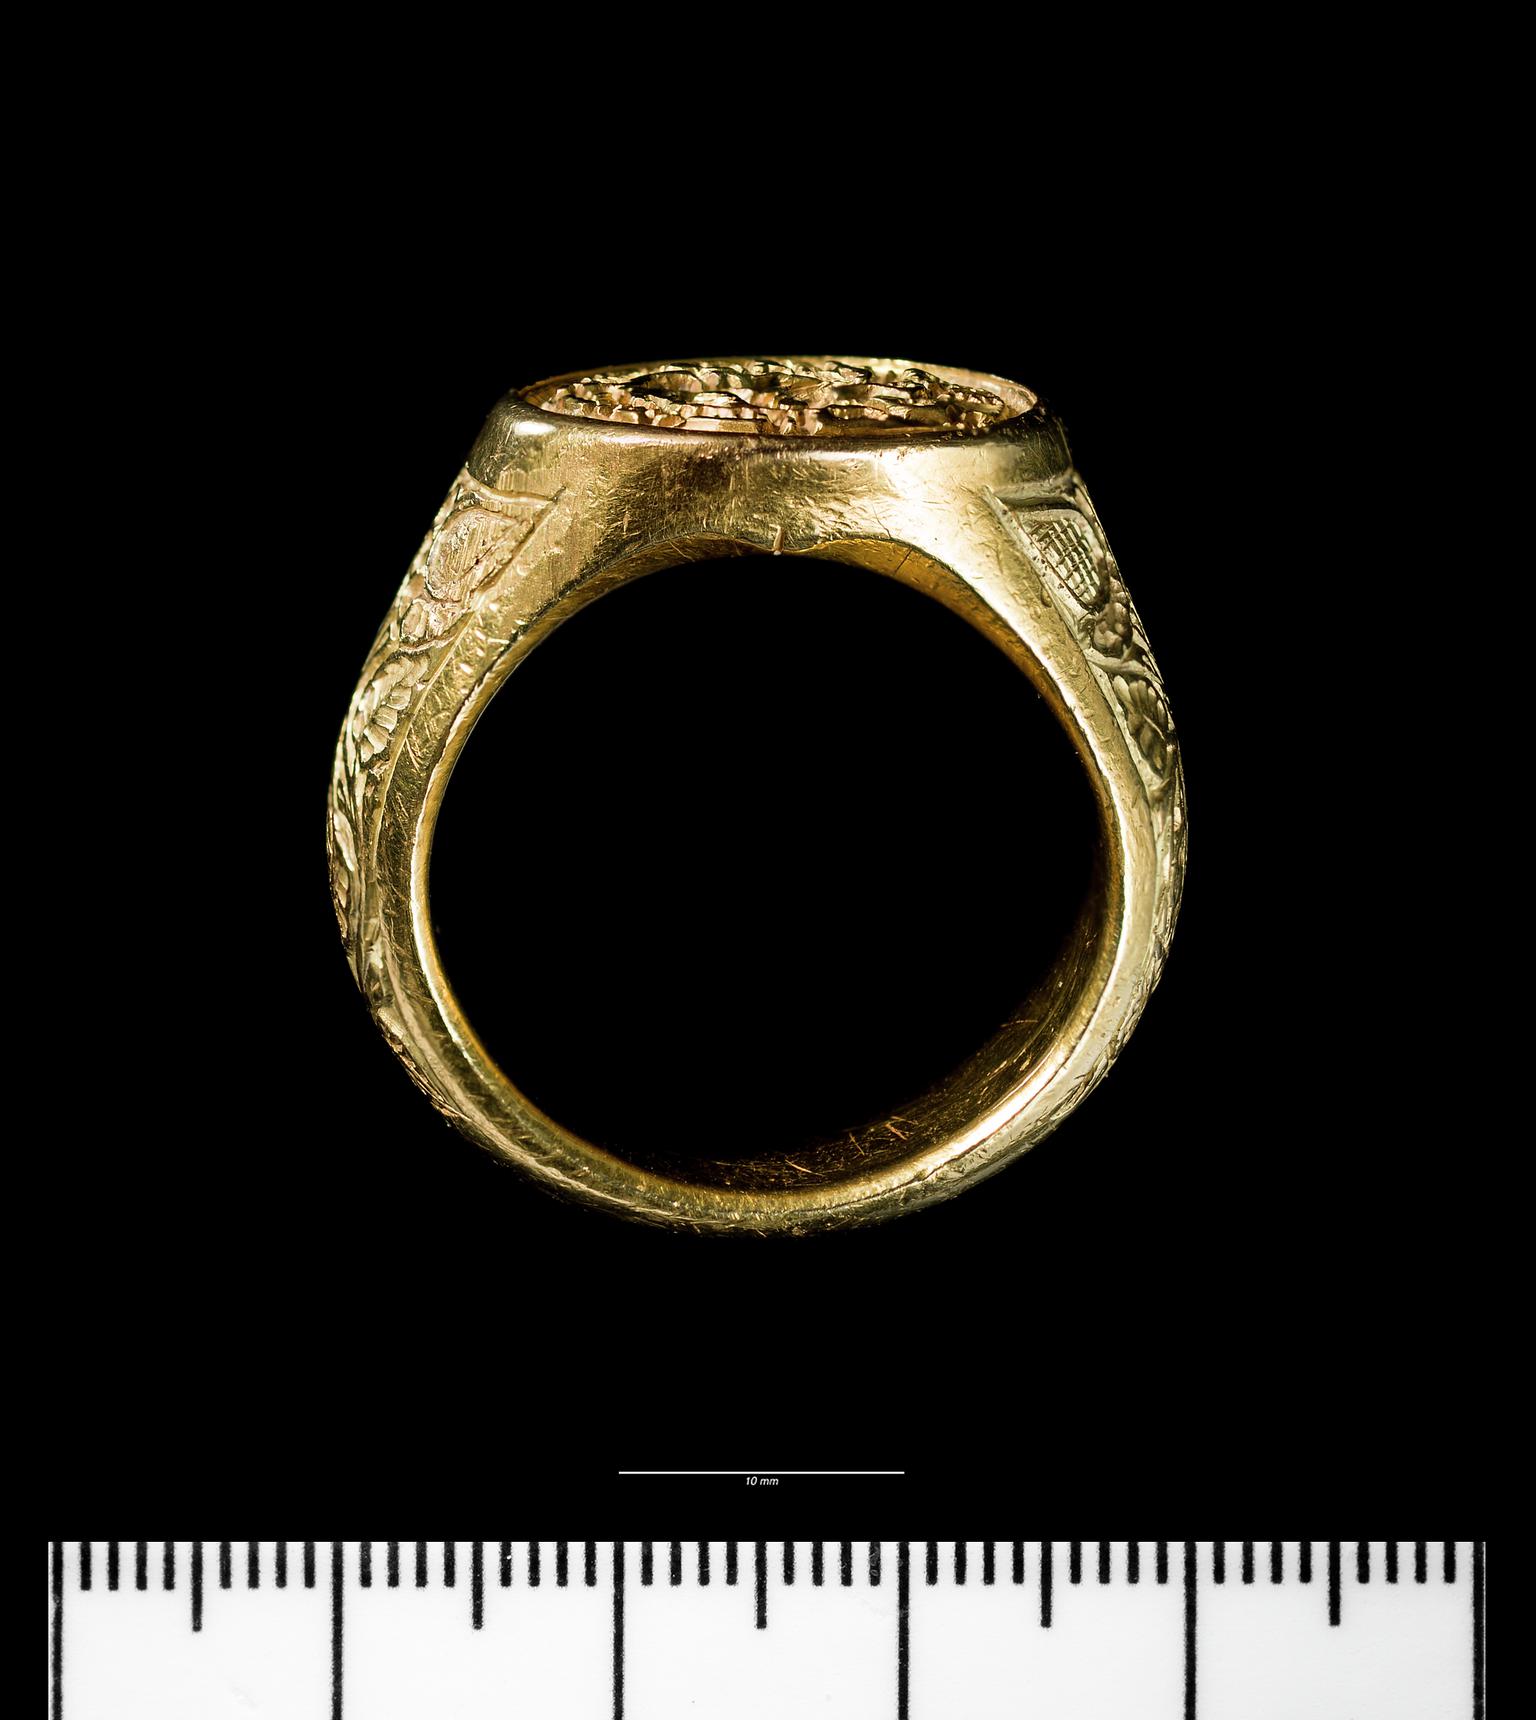 Medieval gold signet ring